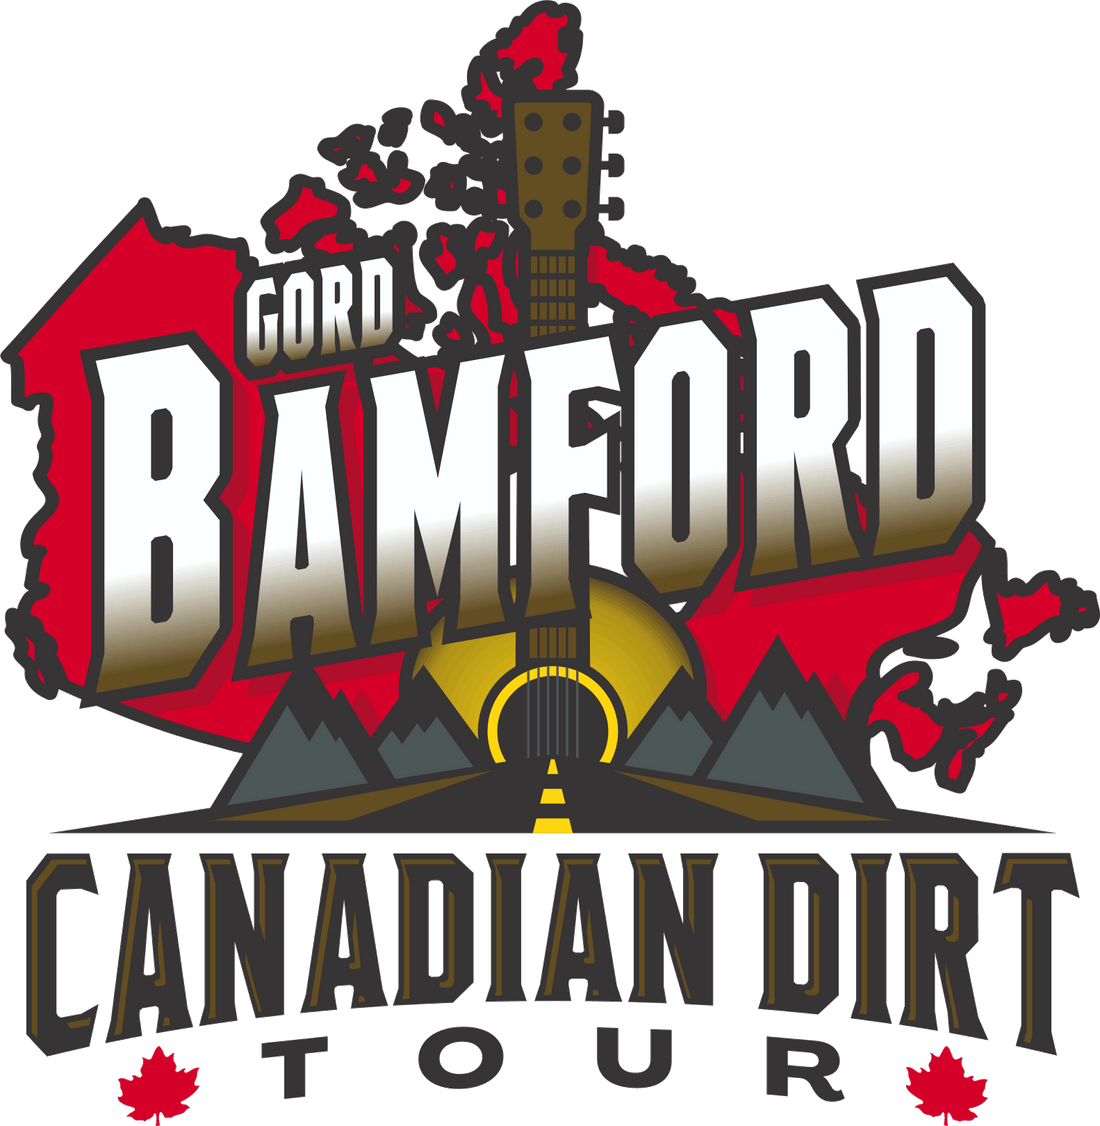 AWARD-WINNING COUNTRY STAR GORD BAMFORD ANNOUNCES THE CANADIAN DIRT TOUR